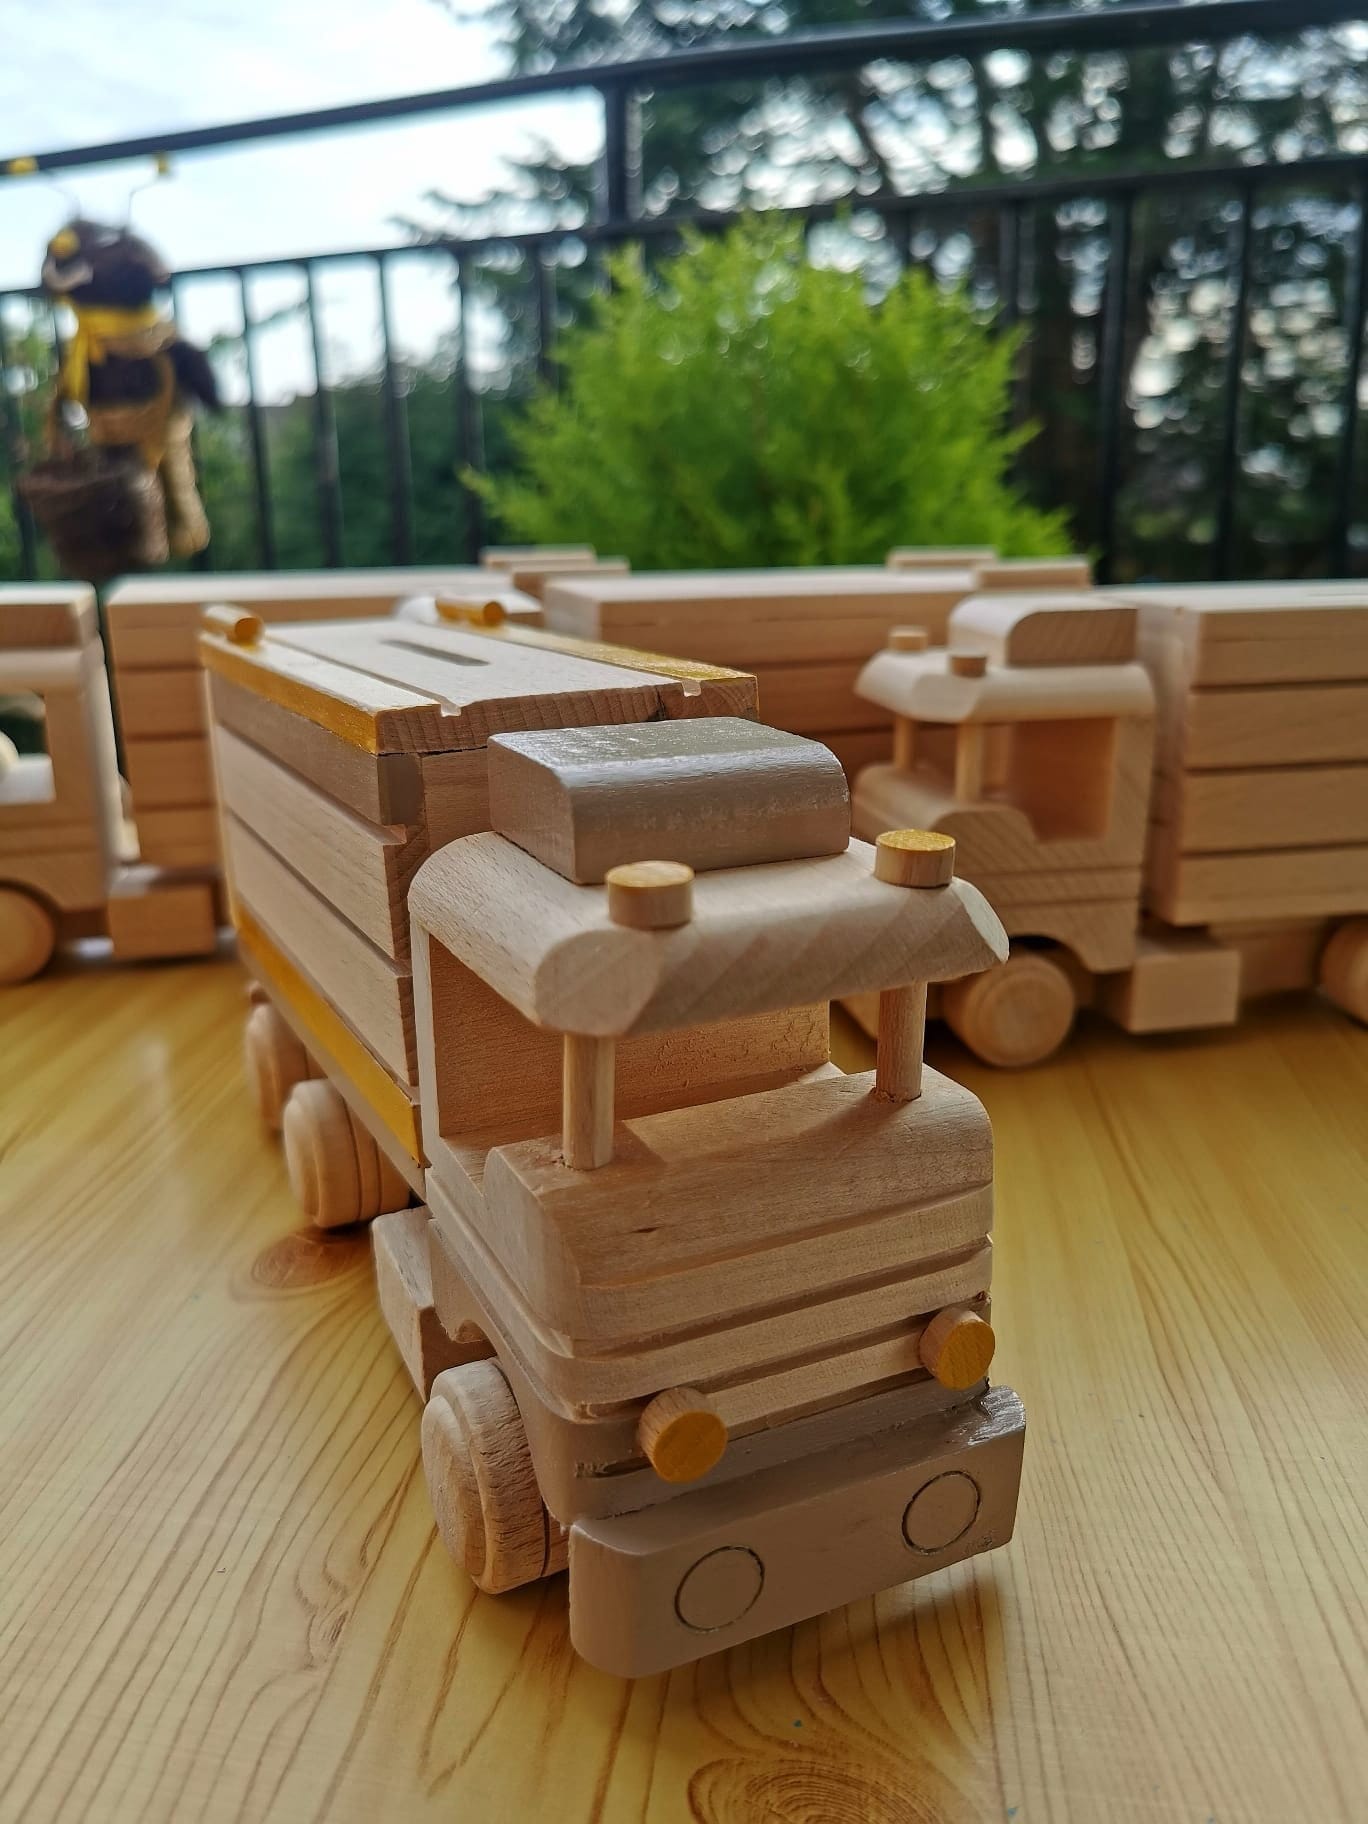 SALE Handmade Wooden Blocks, Eco Friendly Toys, Children Wooden